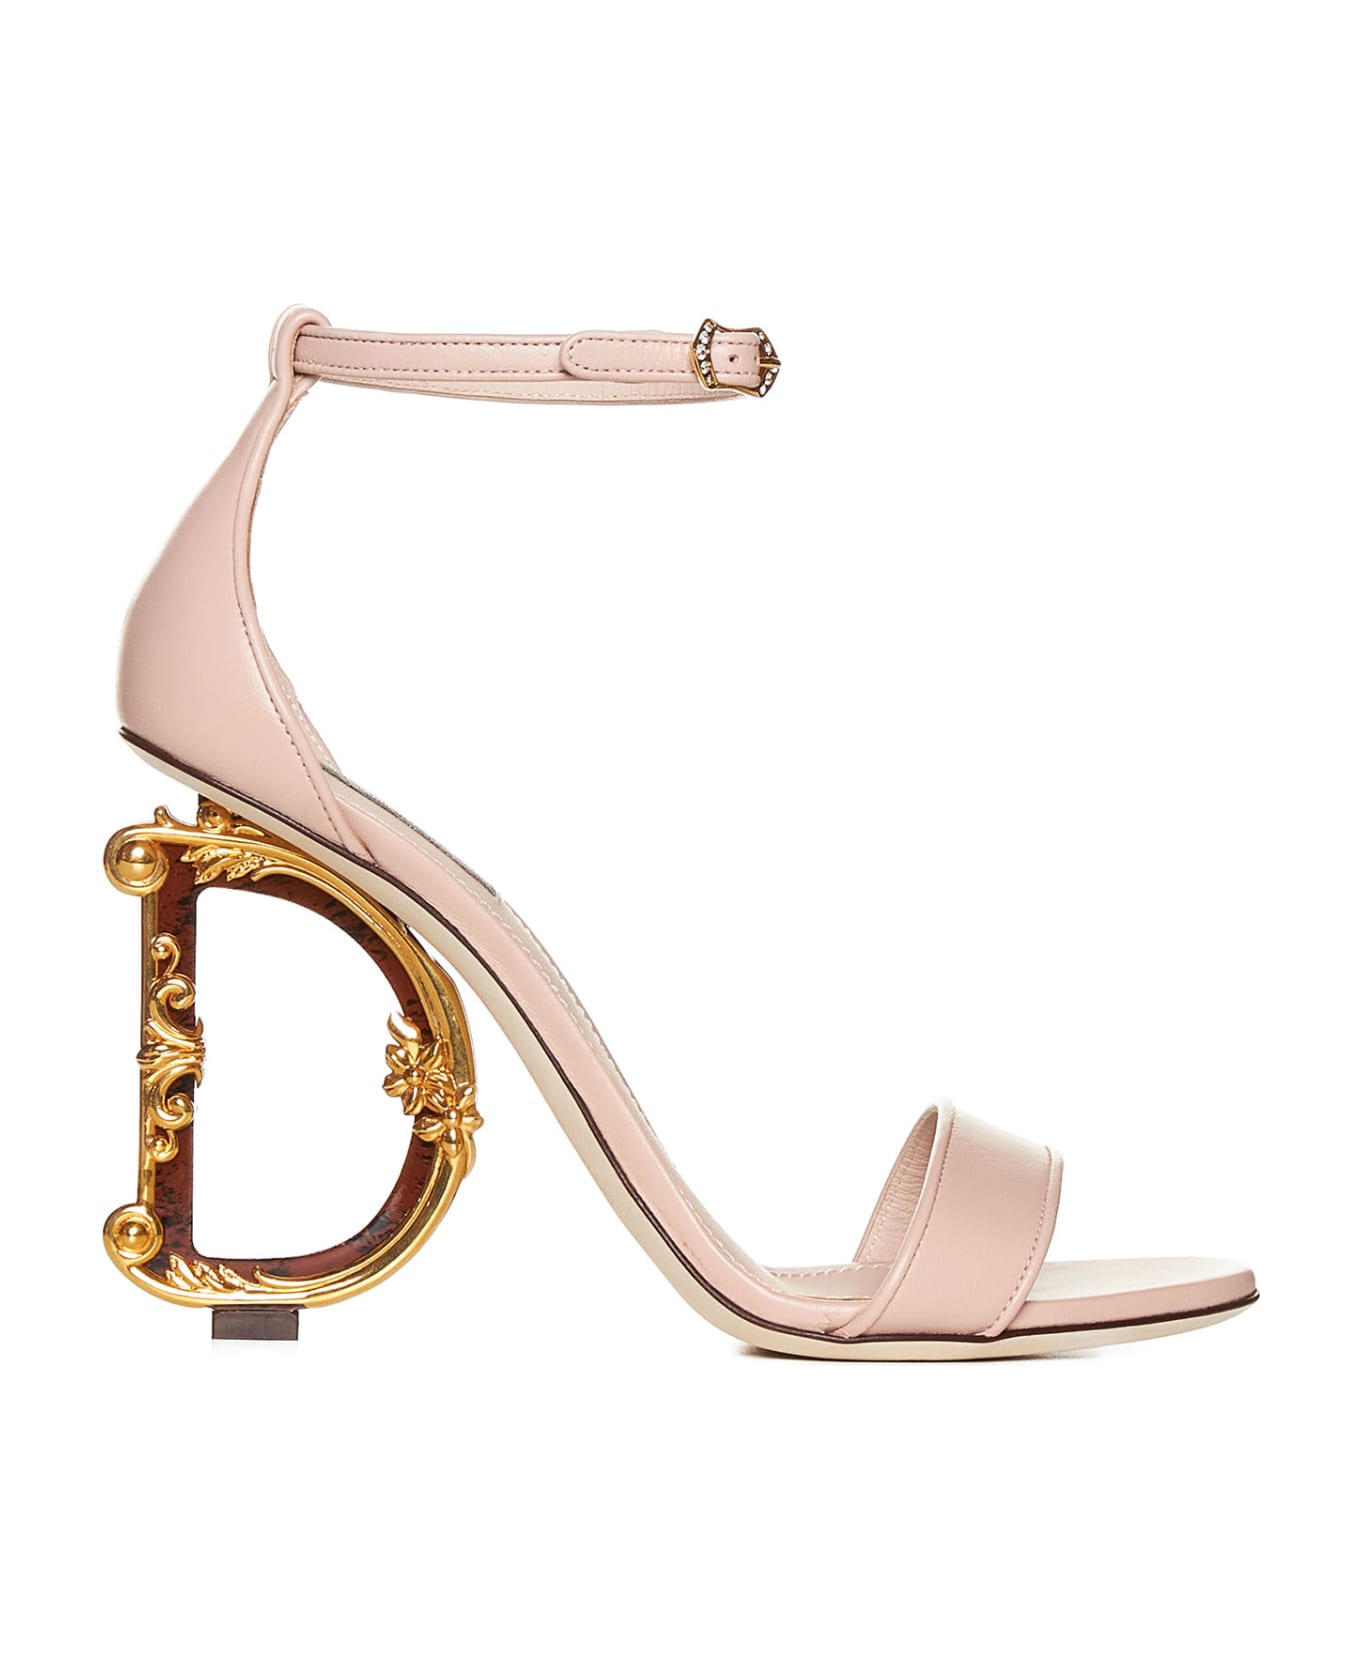 Dolce & Gabbana 'devotion' Sandals - Cipria 1